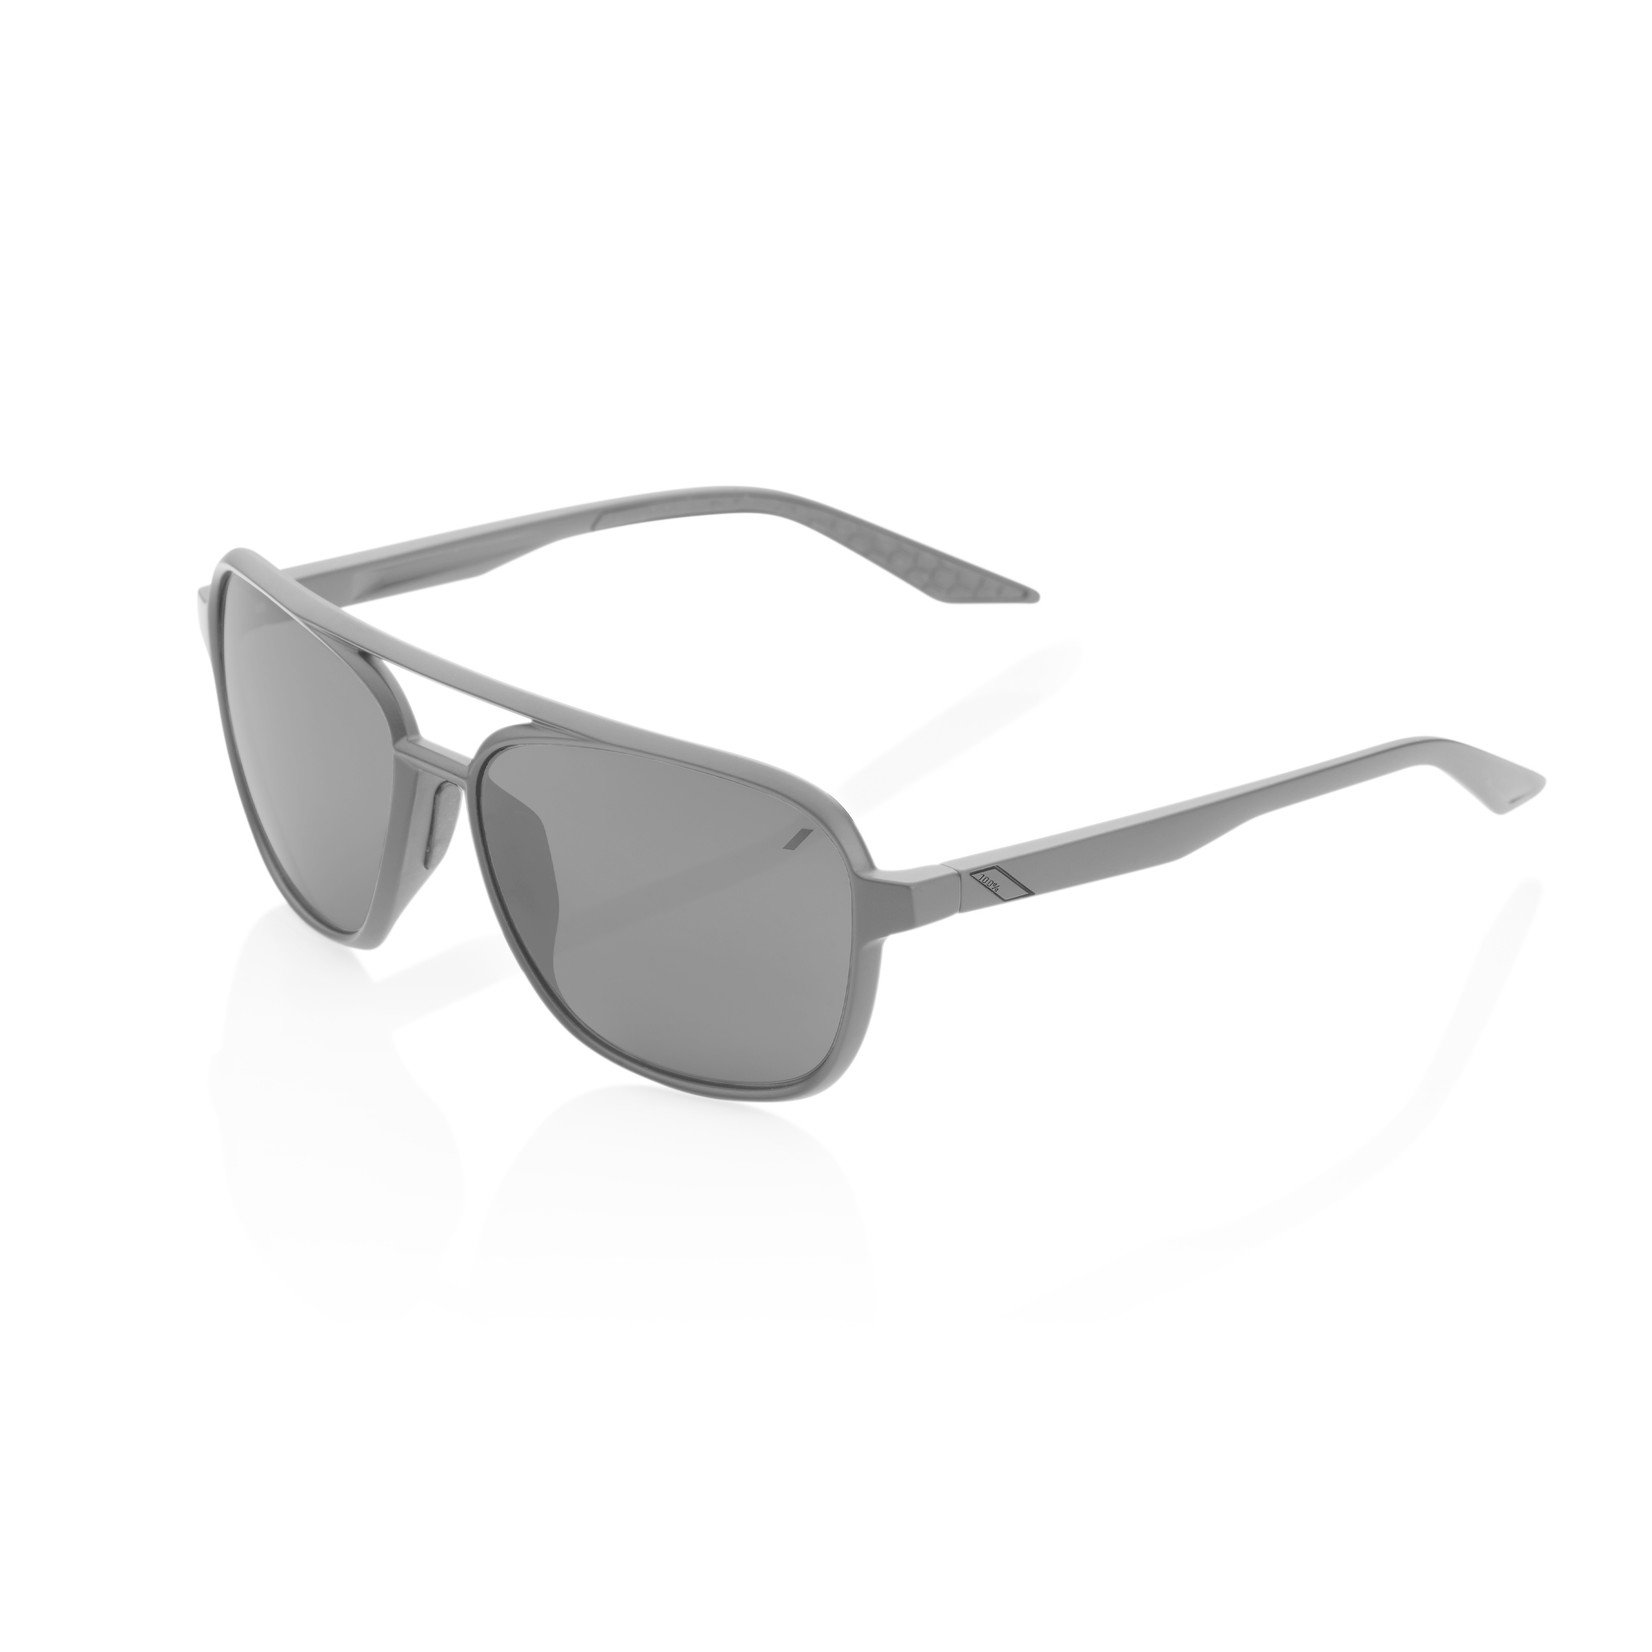 100 Percent 100% Kasia 100% UV Protection (UV400) Sunglasses - Matte Black - Black Mirror